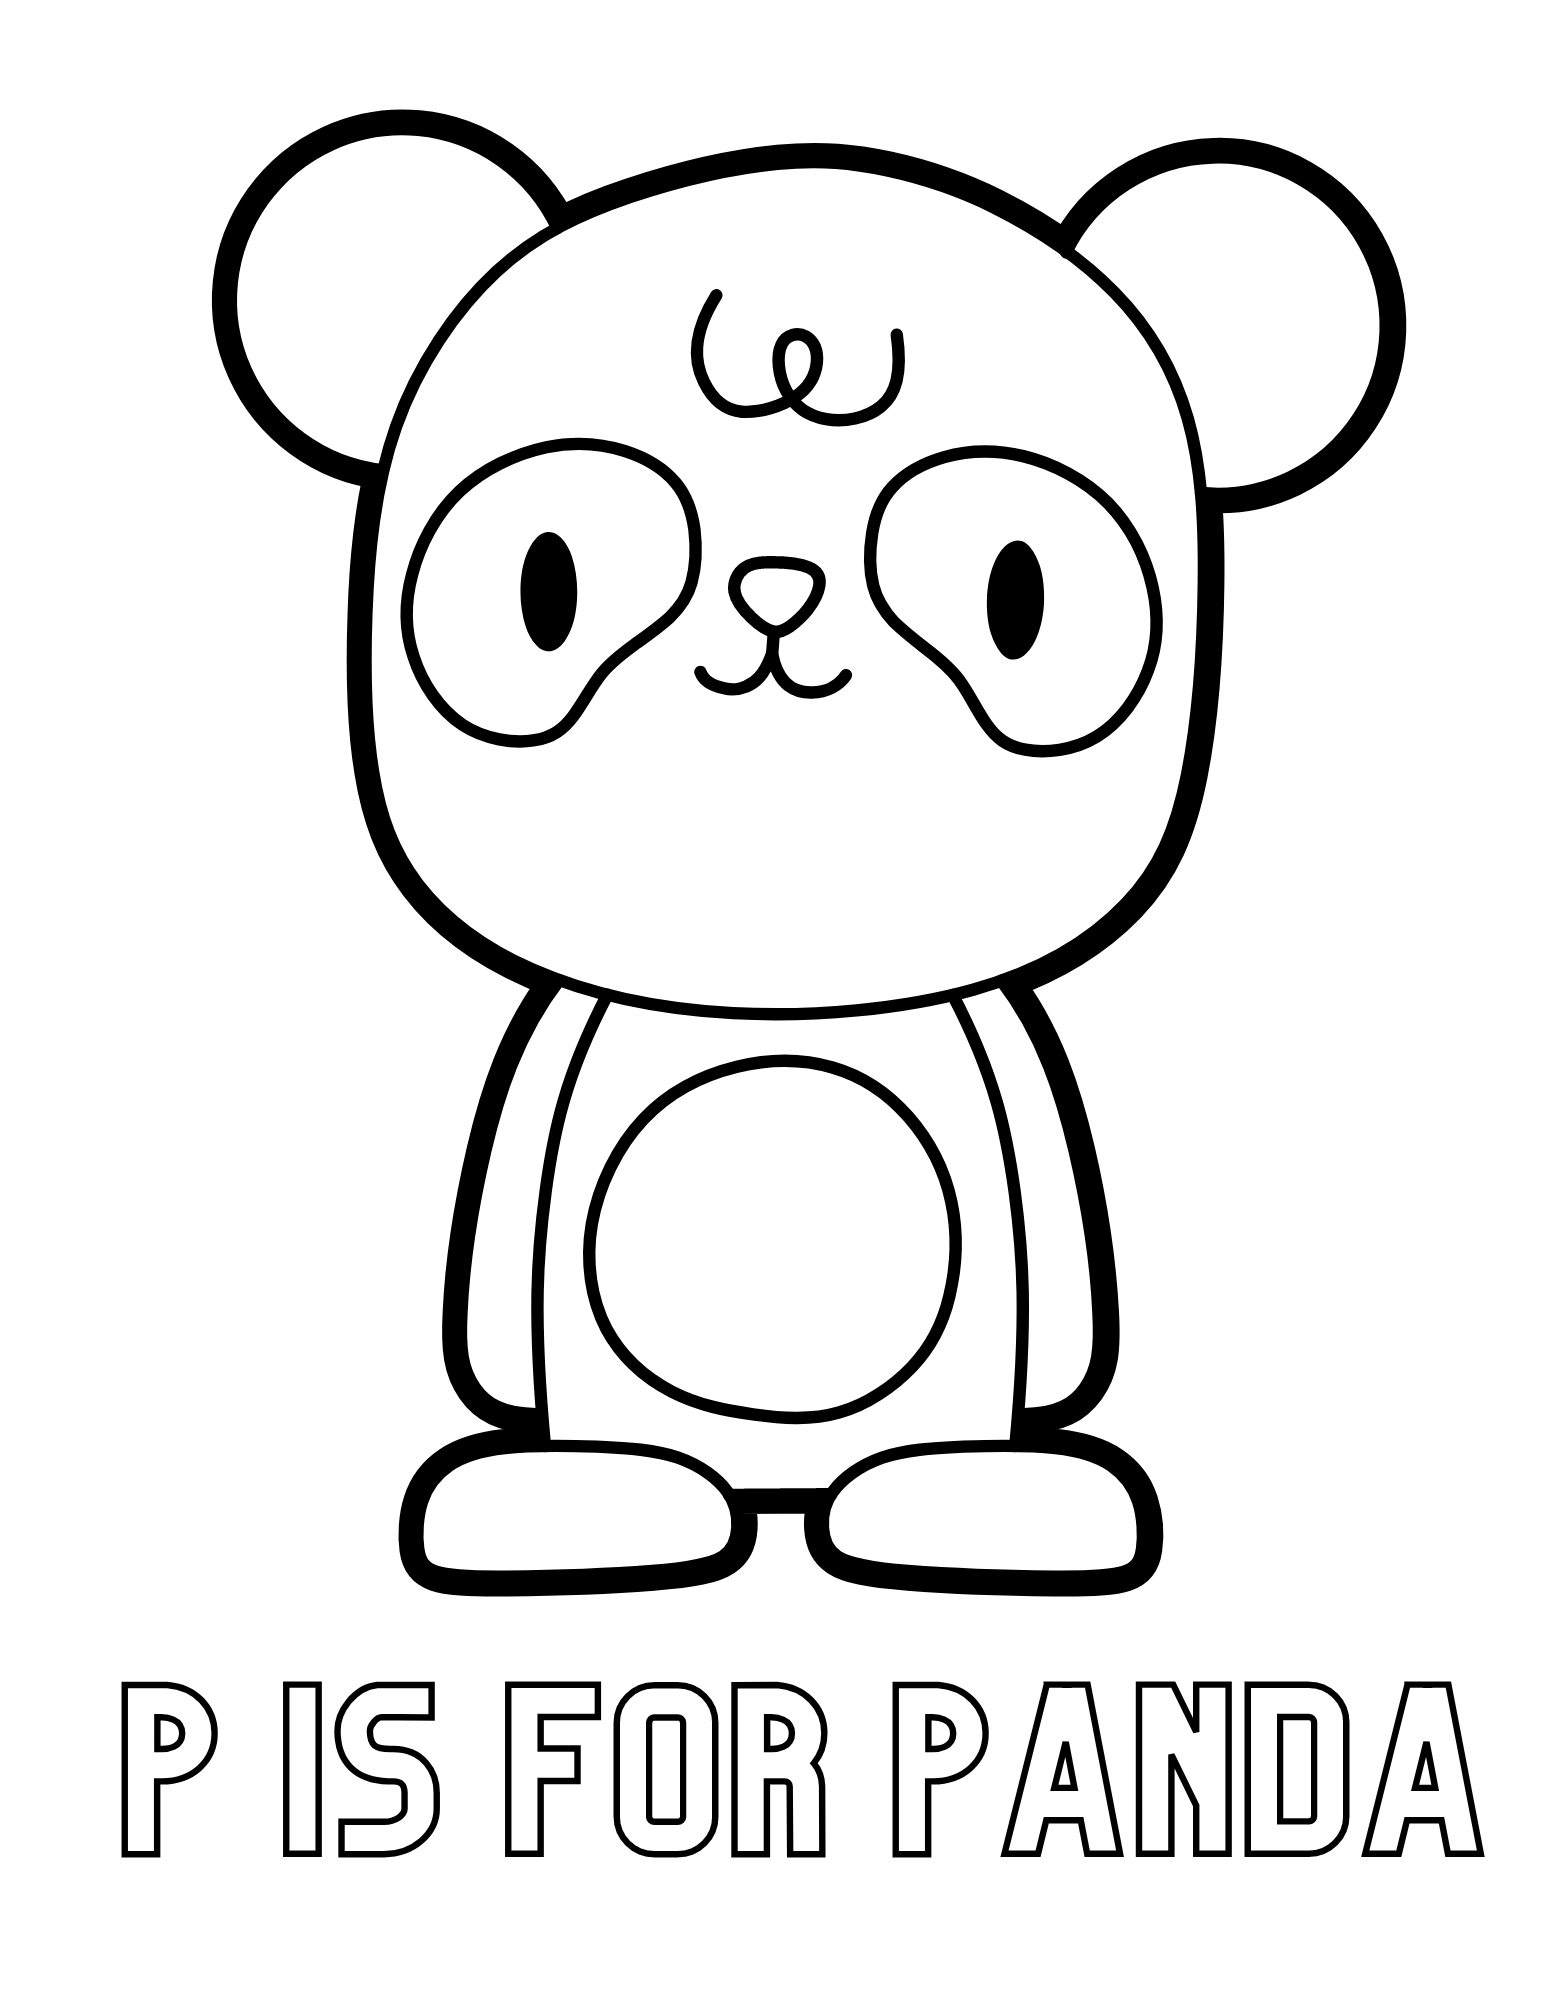 Fun panda facts and free printable panda coloring pages